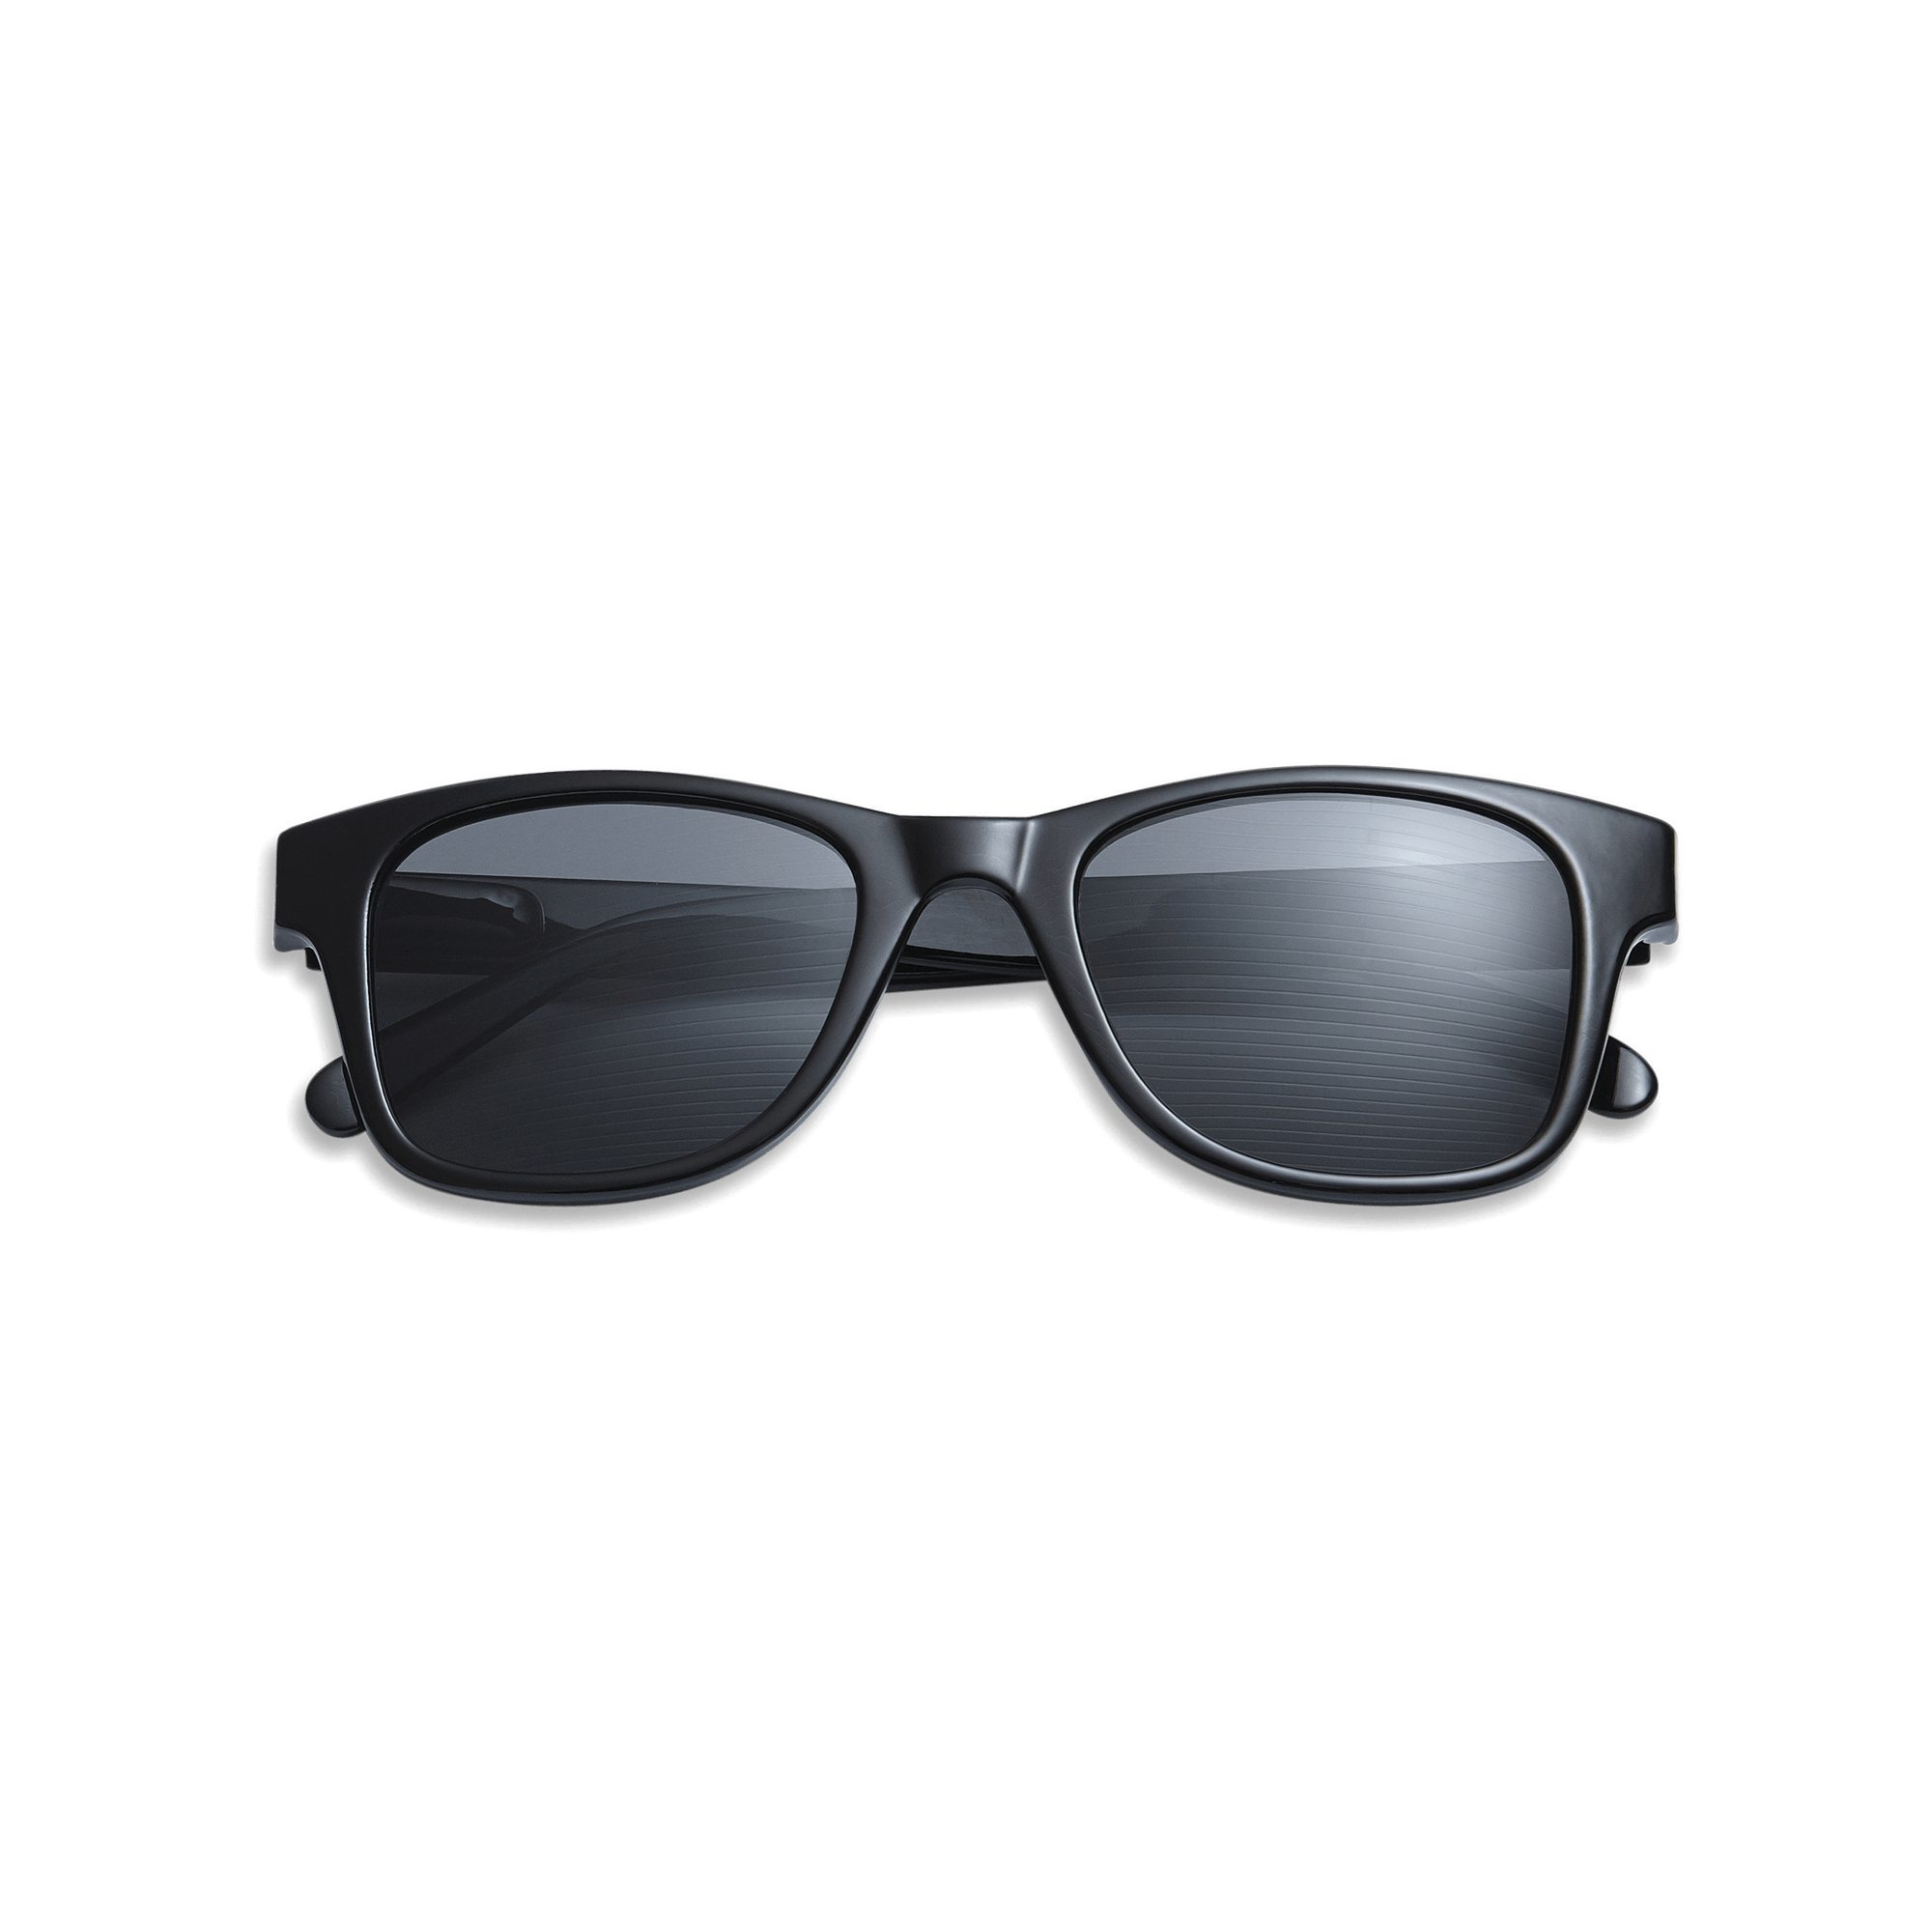 Minus sunglasses Type B - black